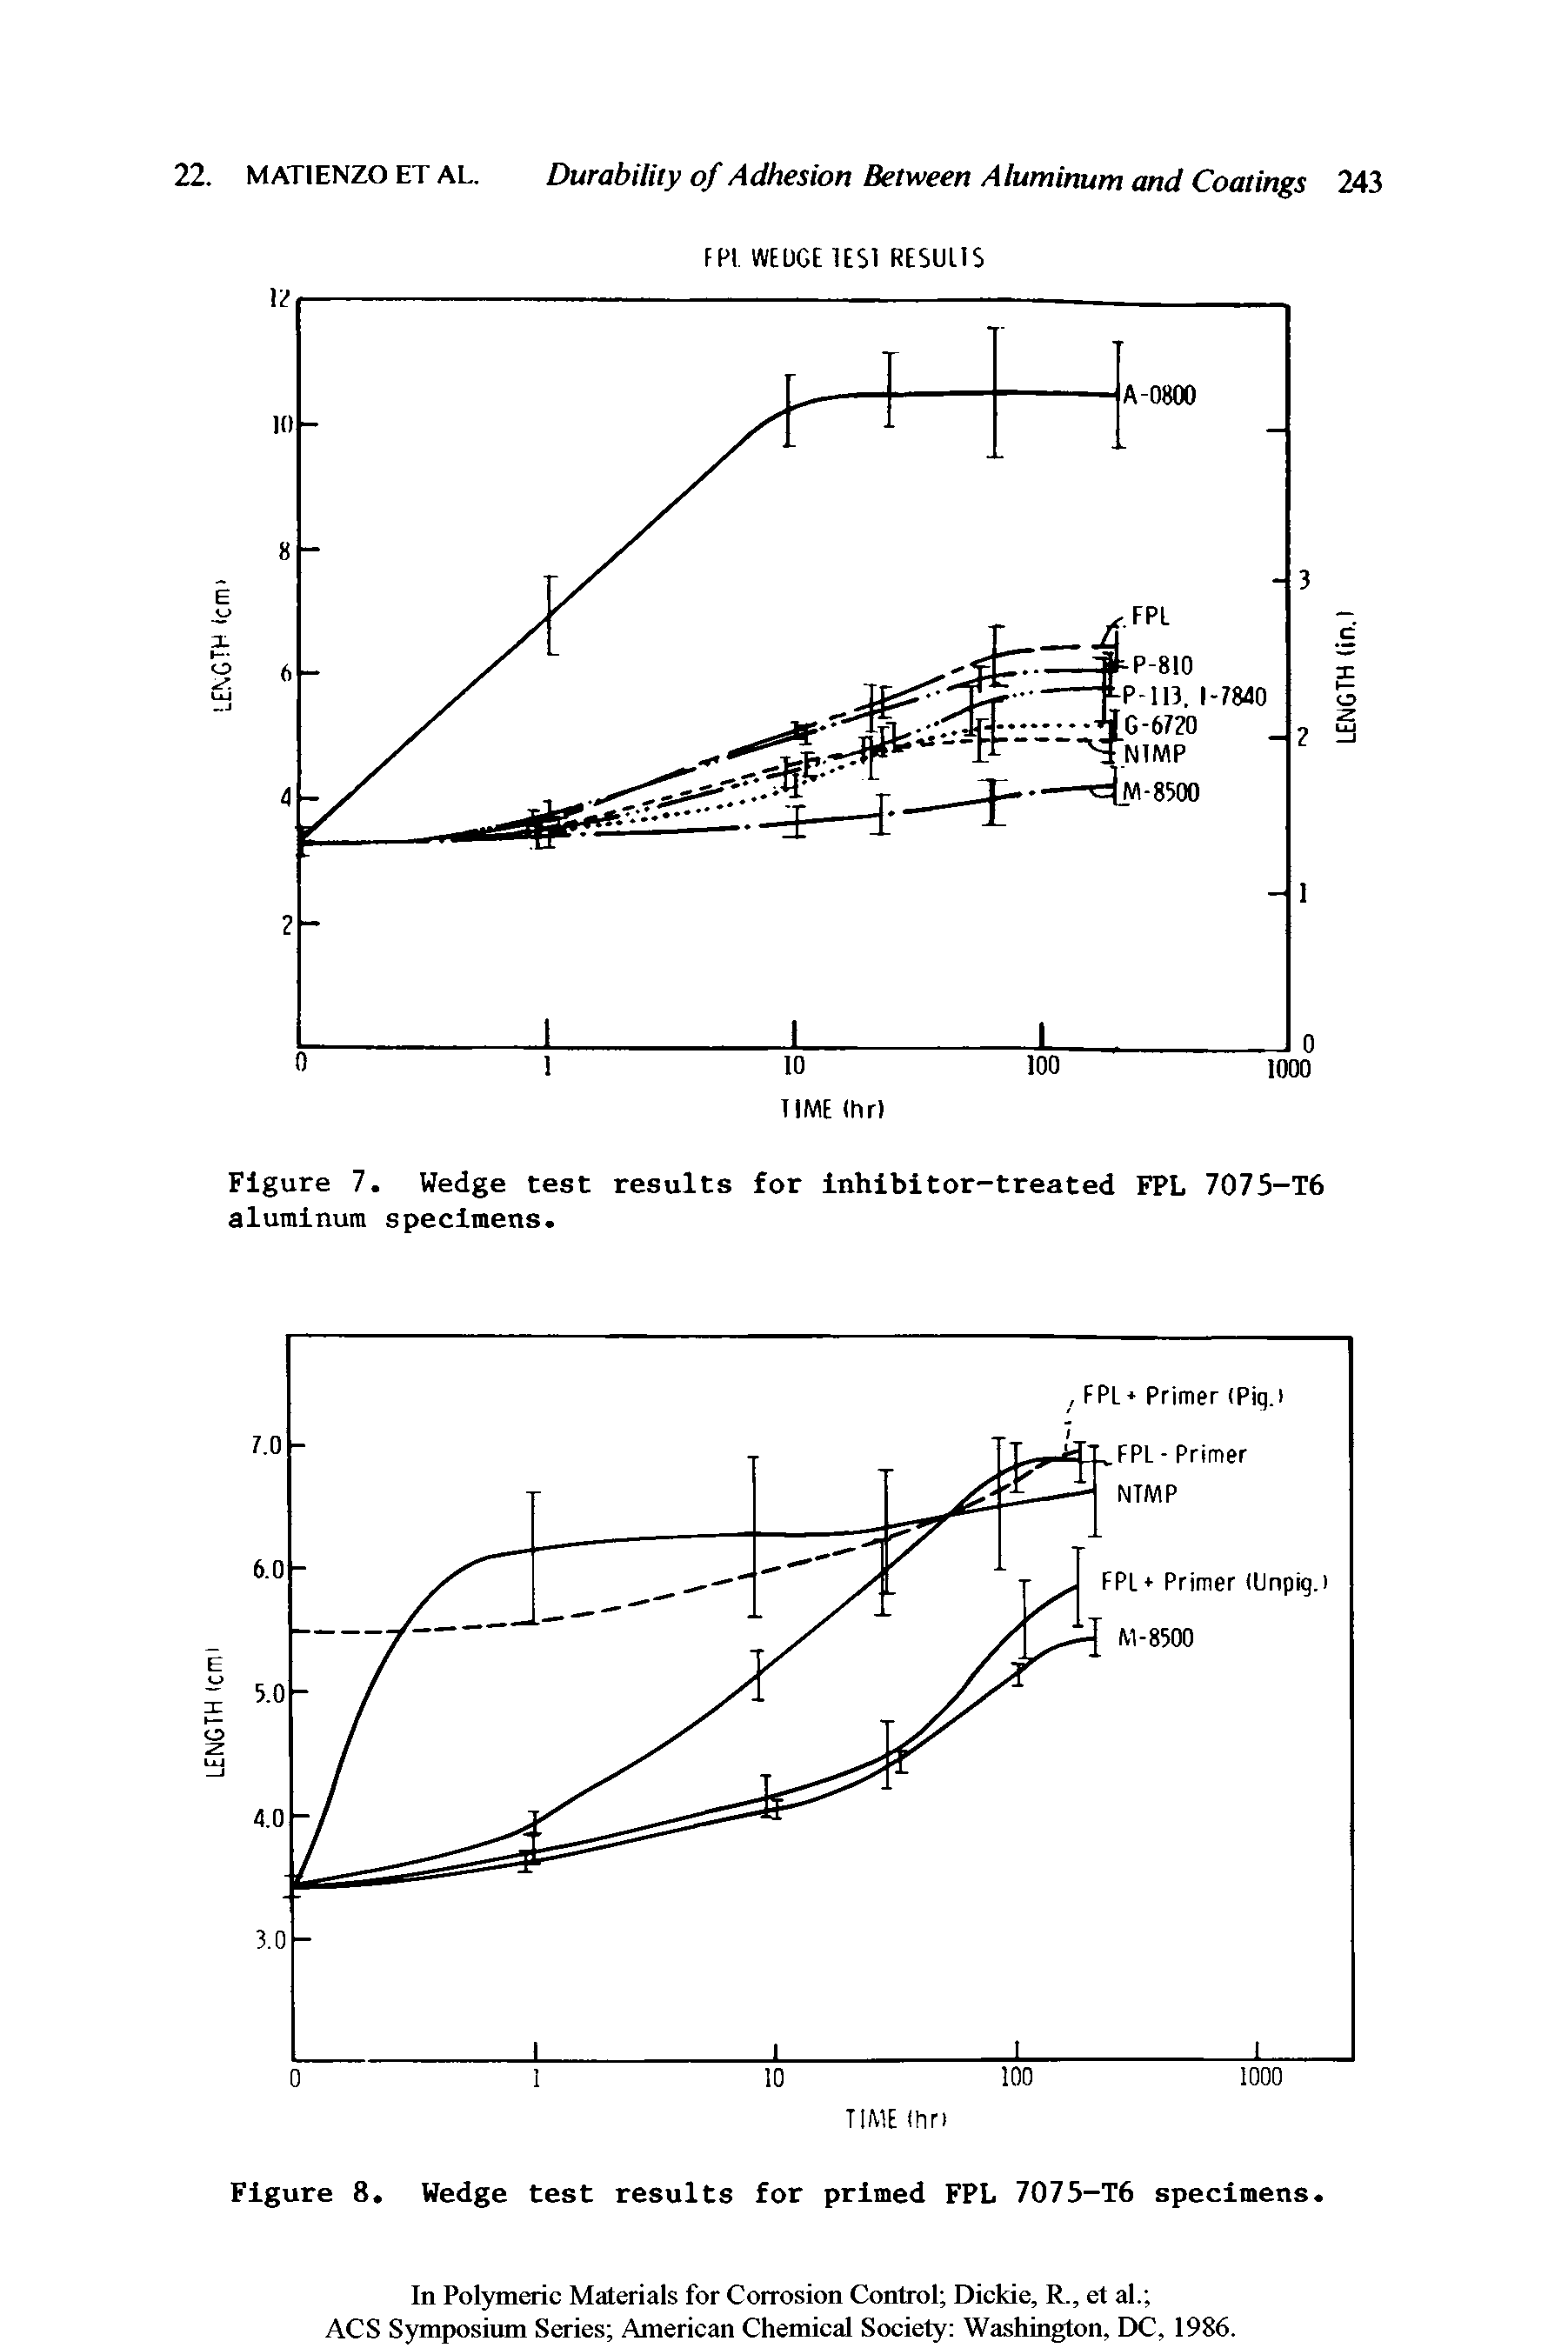 Figure 8. Wedge test results for primed FPL 7075-T6 specimens.